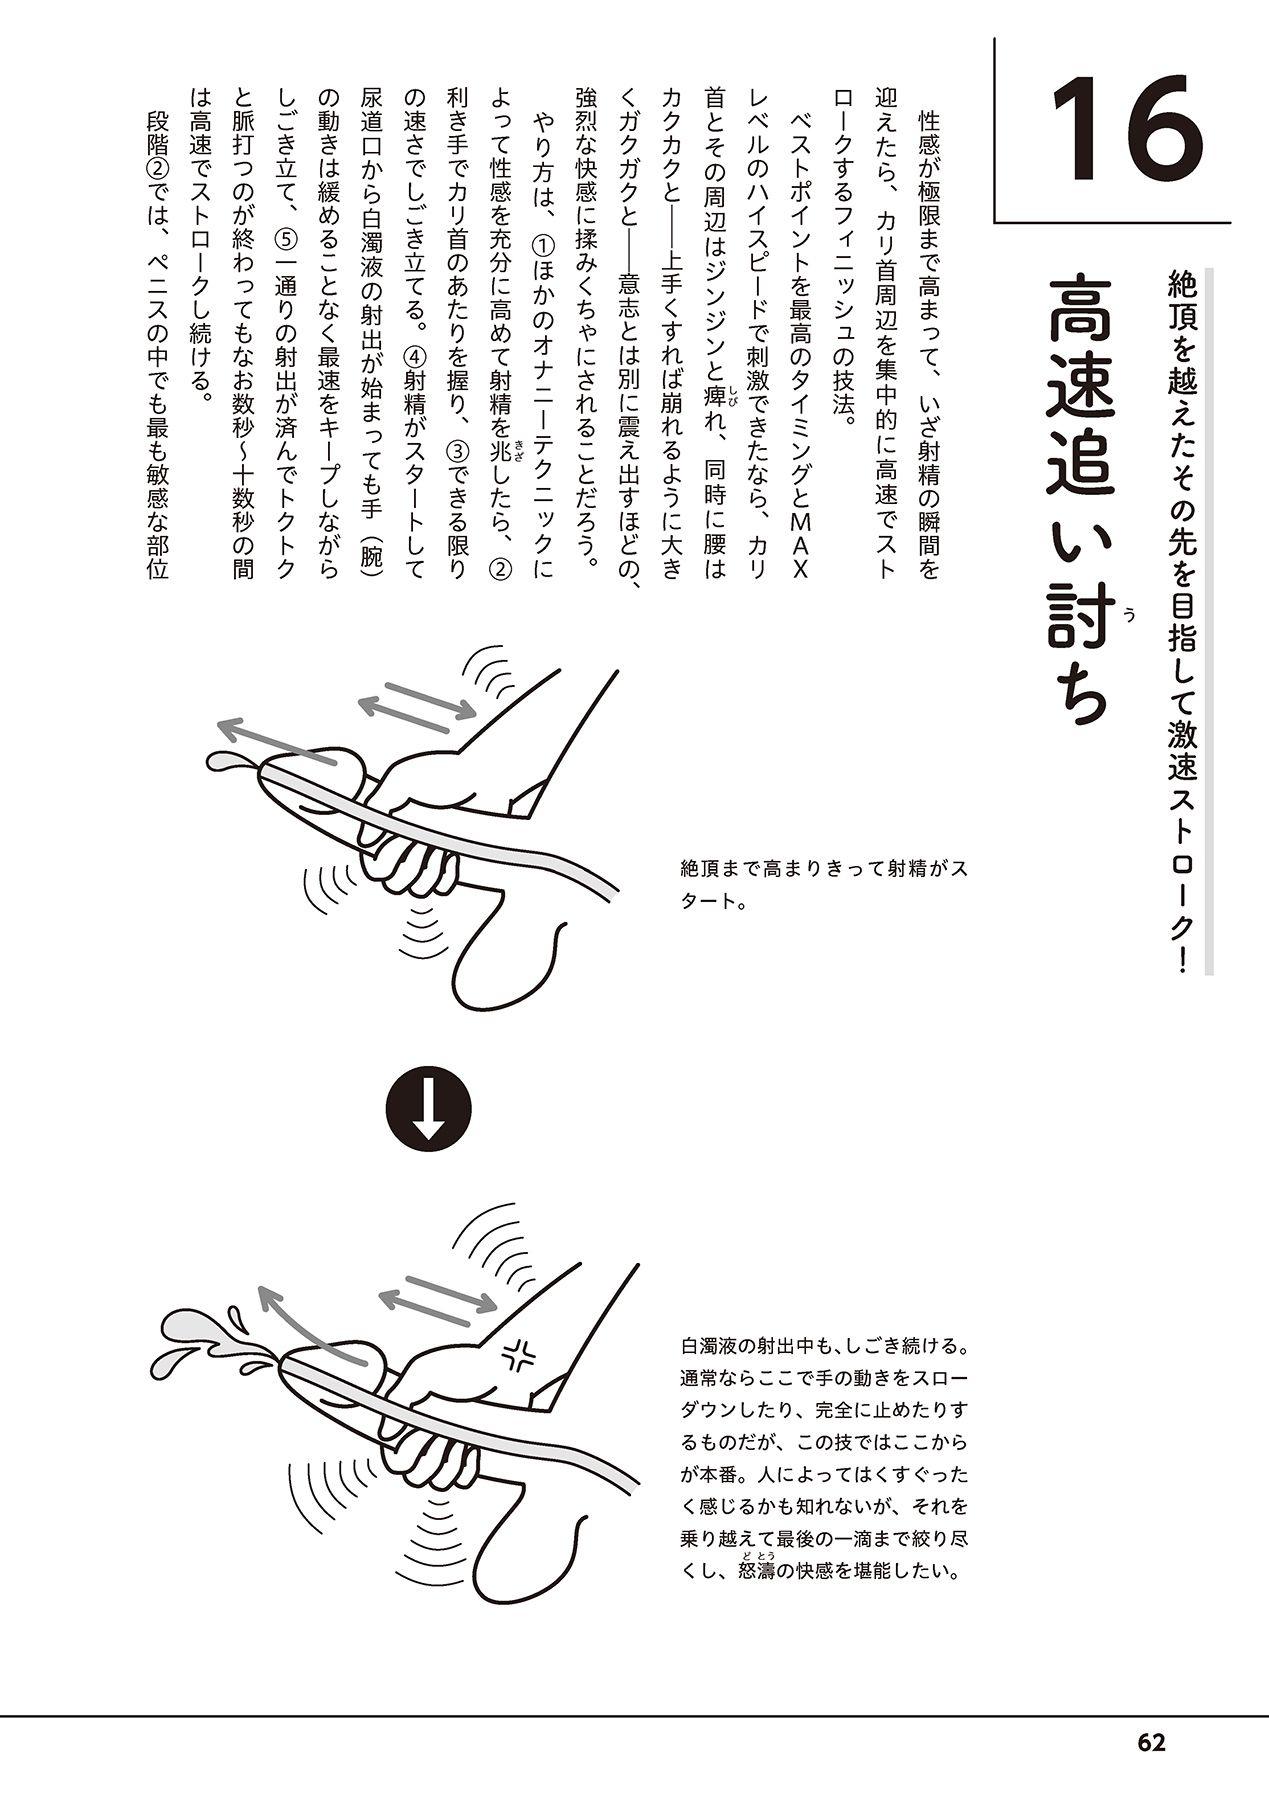 Otoko no Jii Onanie Kanzen Manual Illustration Han...... Onanie Play 63